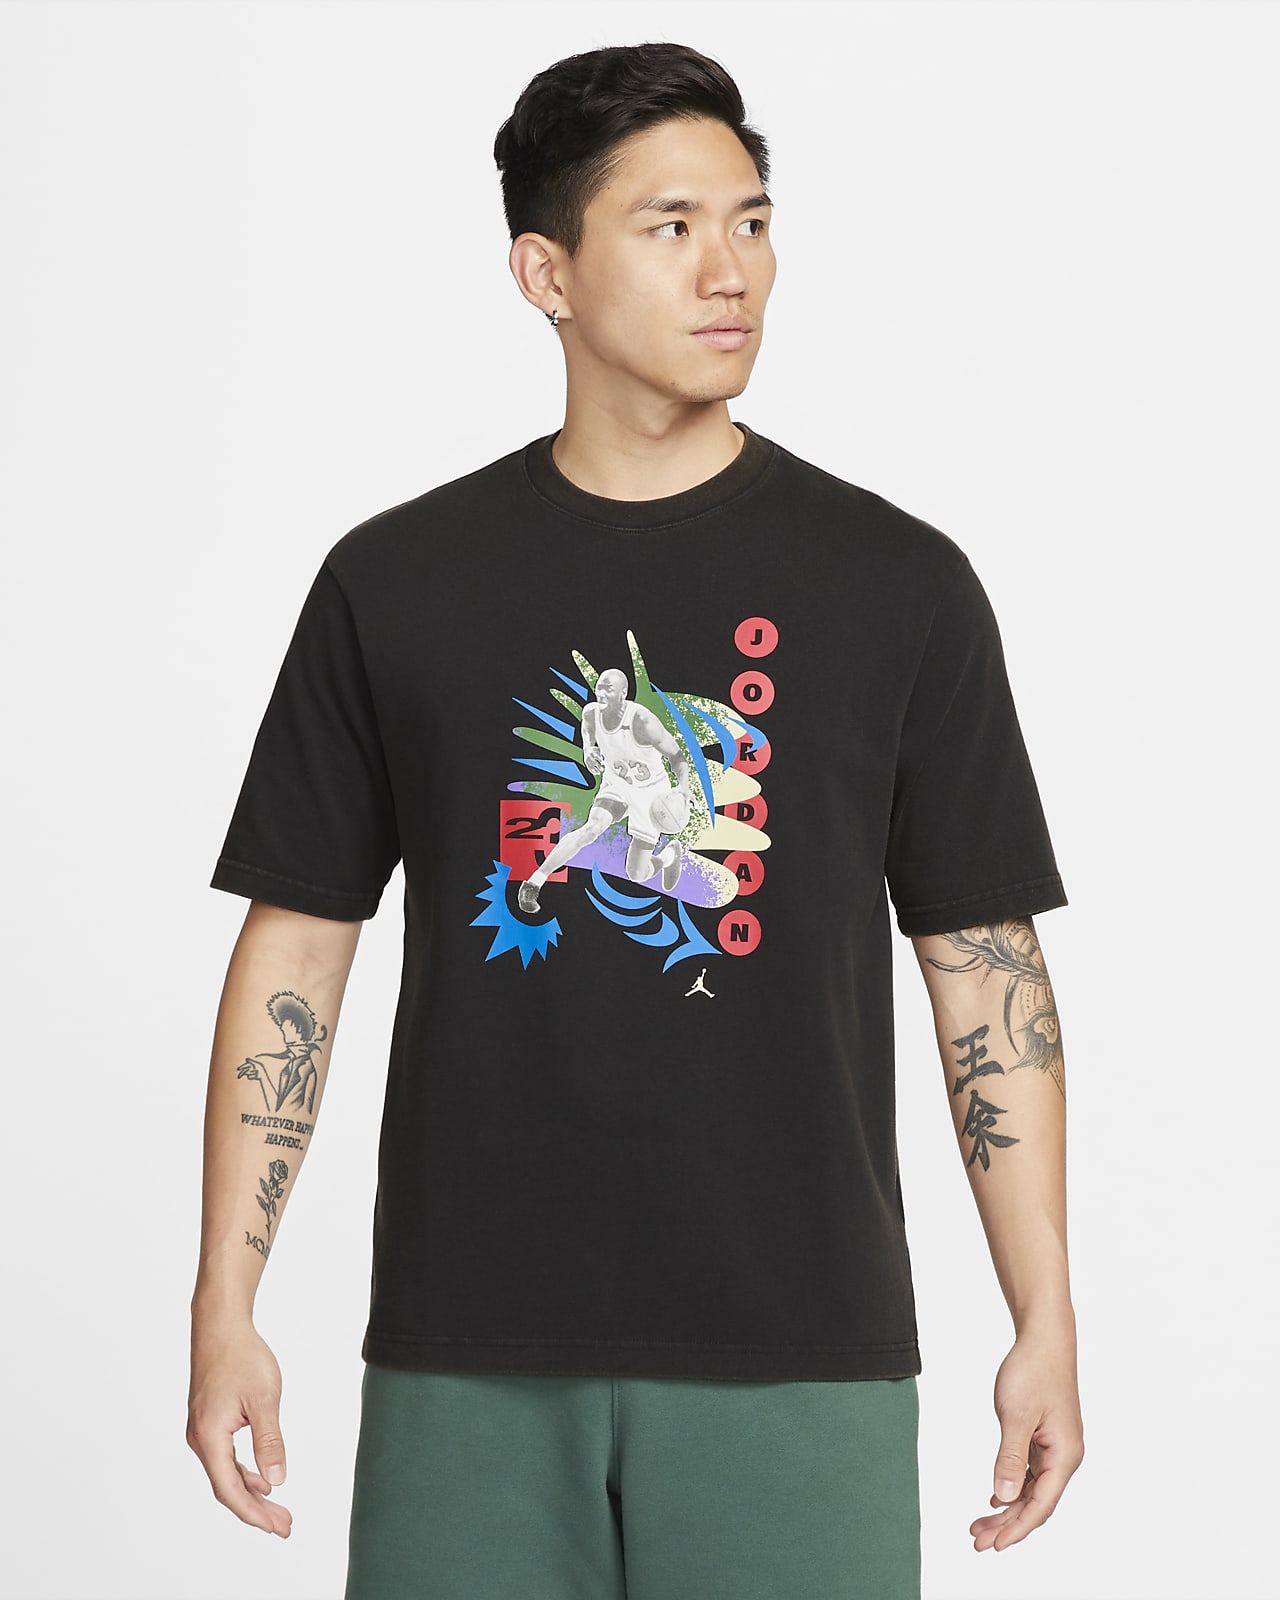 NIKE公式】ジョーダン HL TOKYO ビンテージ 1985 メンズ Tシャツ.オンラインストア (通販サイト)